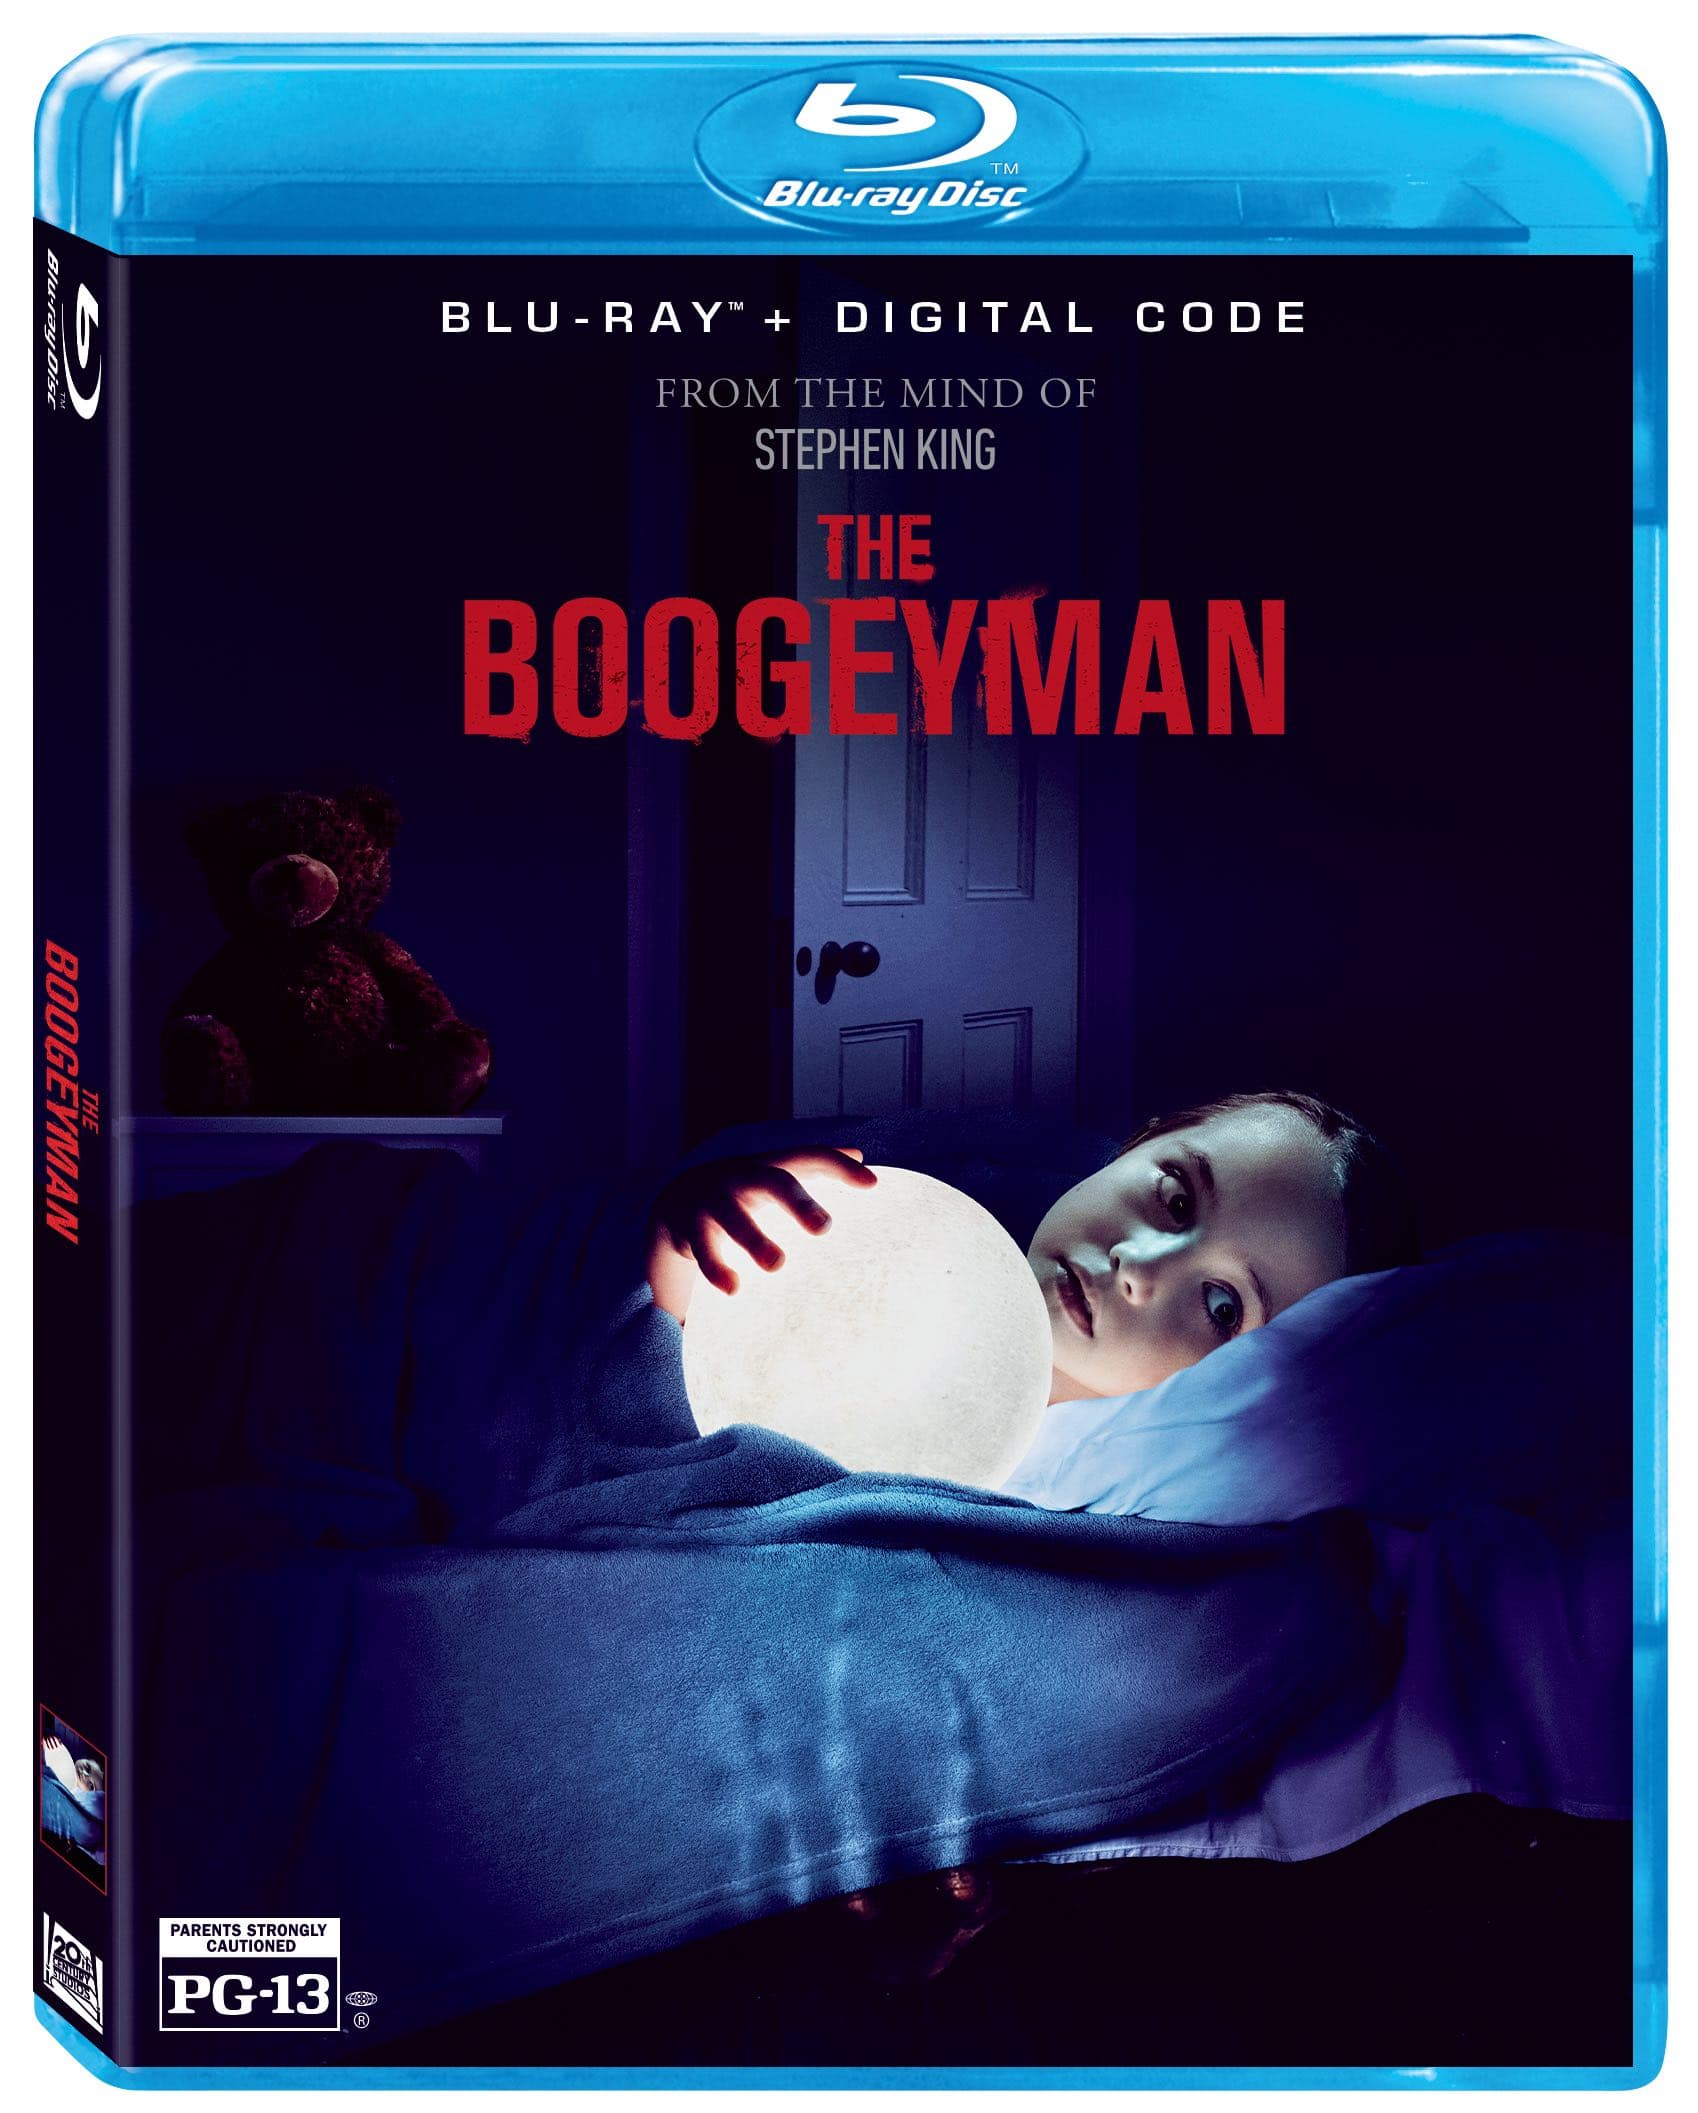 The Boogeyman Release Date Blu-ray Digital